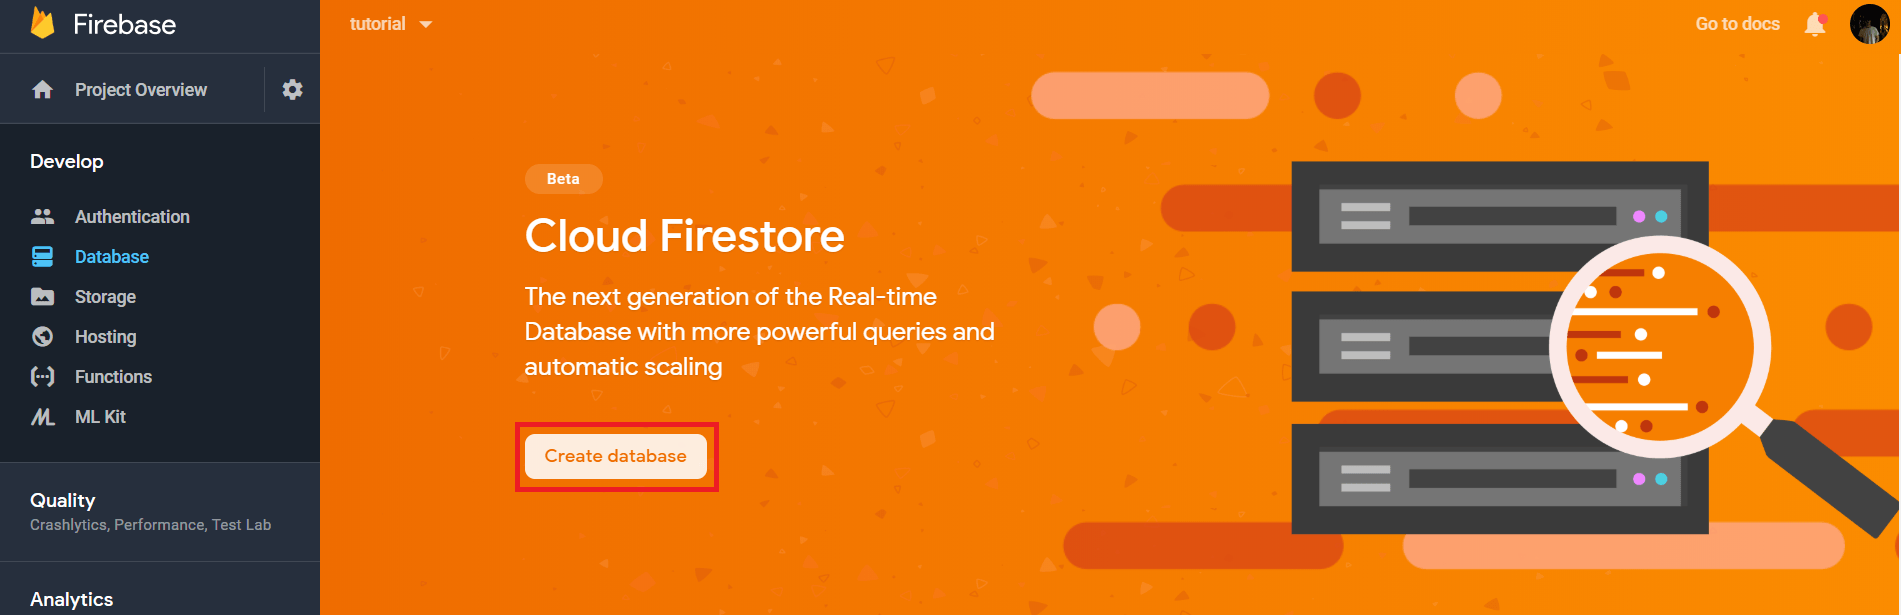 Google Firebase Firestore Landing Page